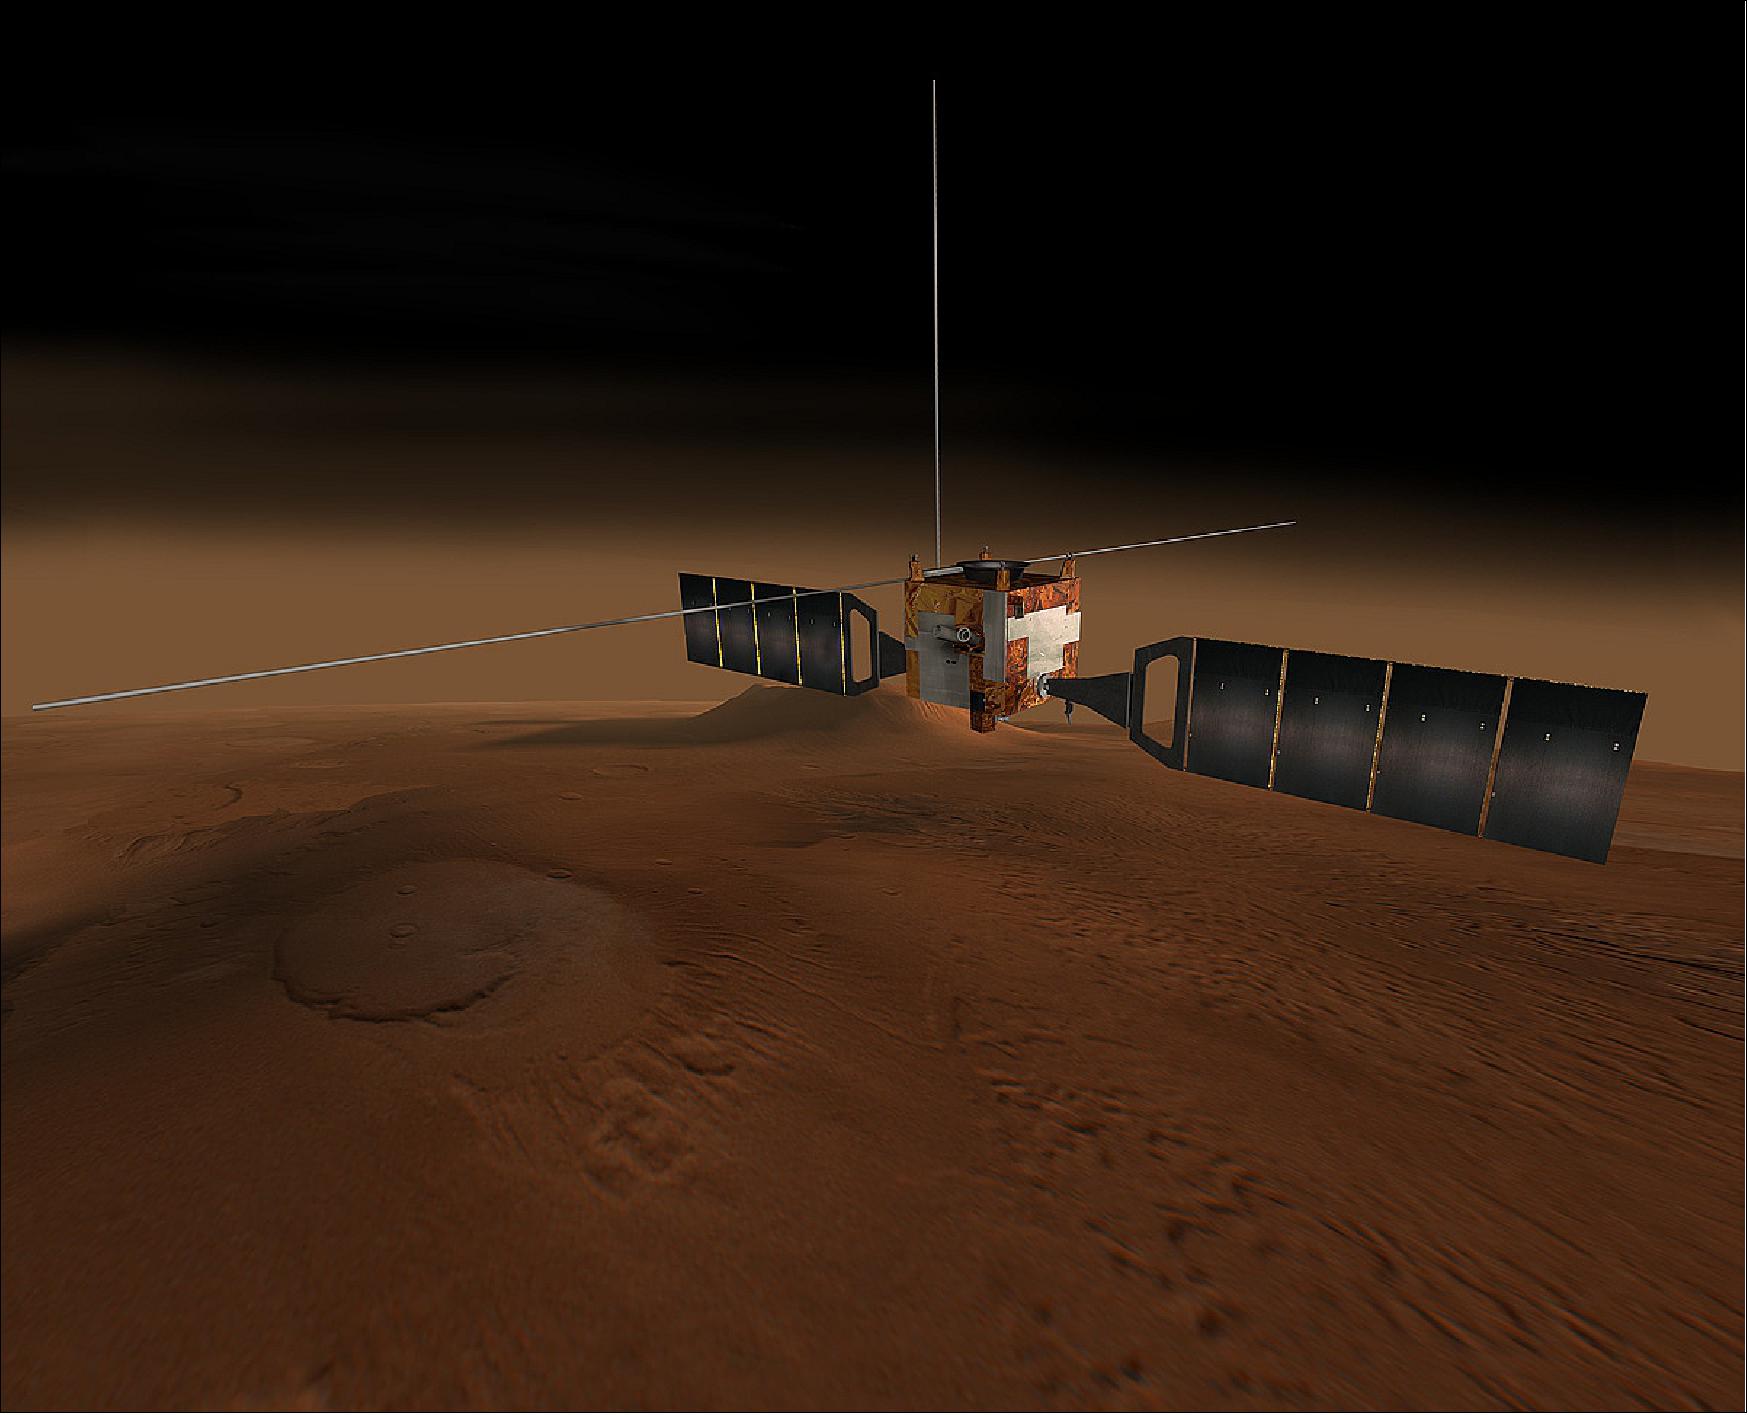 Figure 1: Illustration of ESA's Mars Express spacecraft (image credit: ESA)